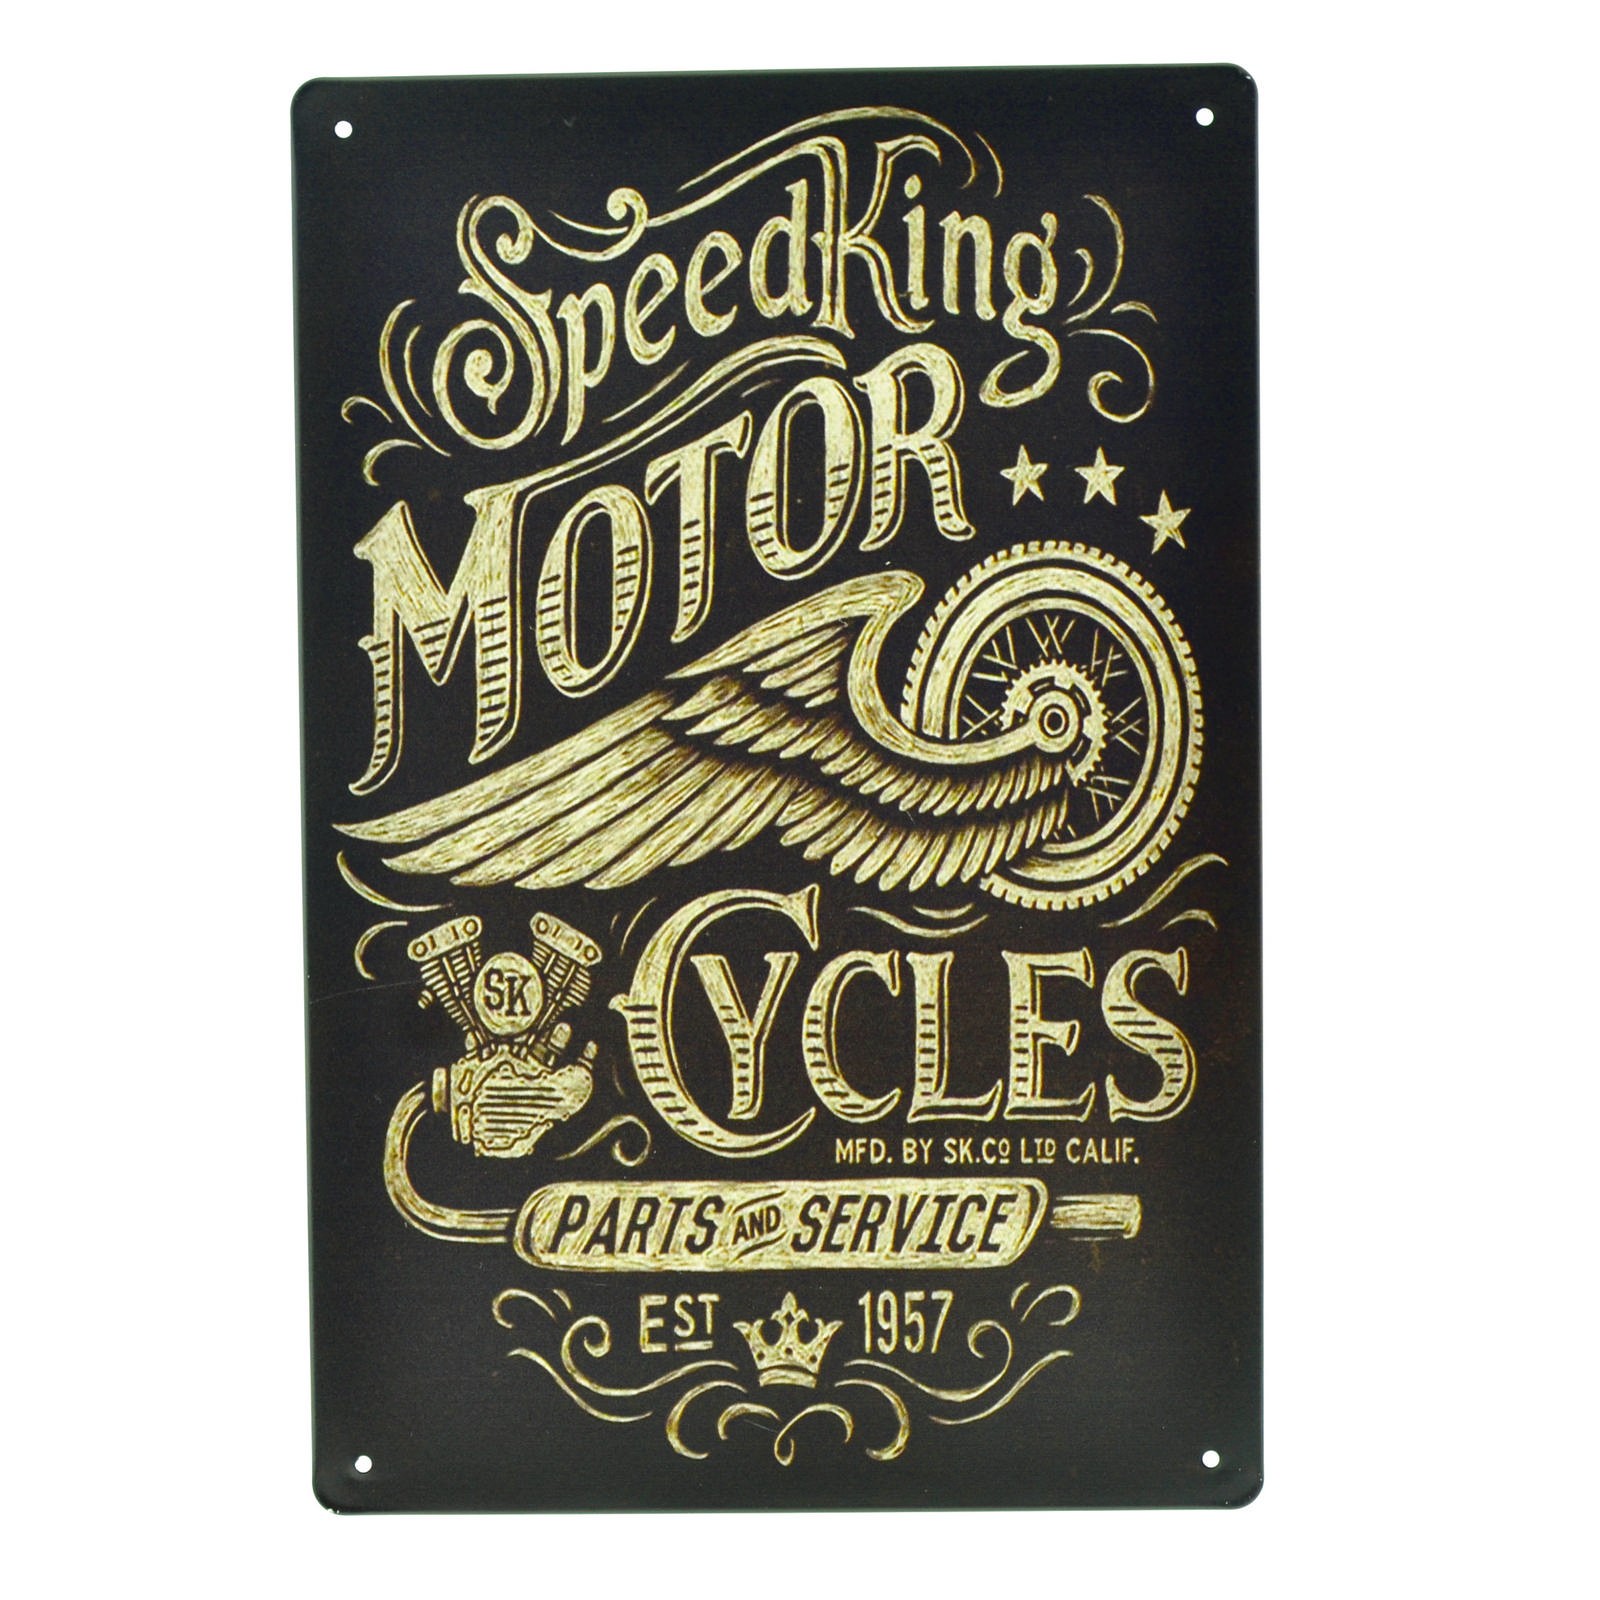 Cartel Metálico de Speed King Motor Cycles